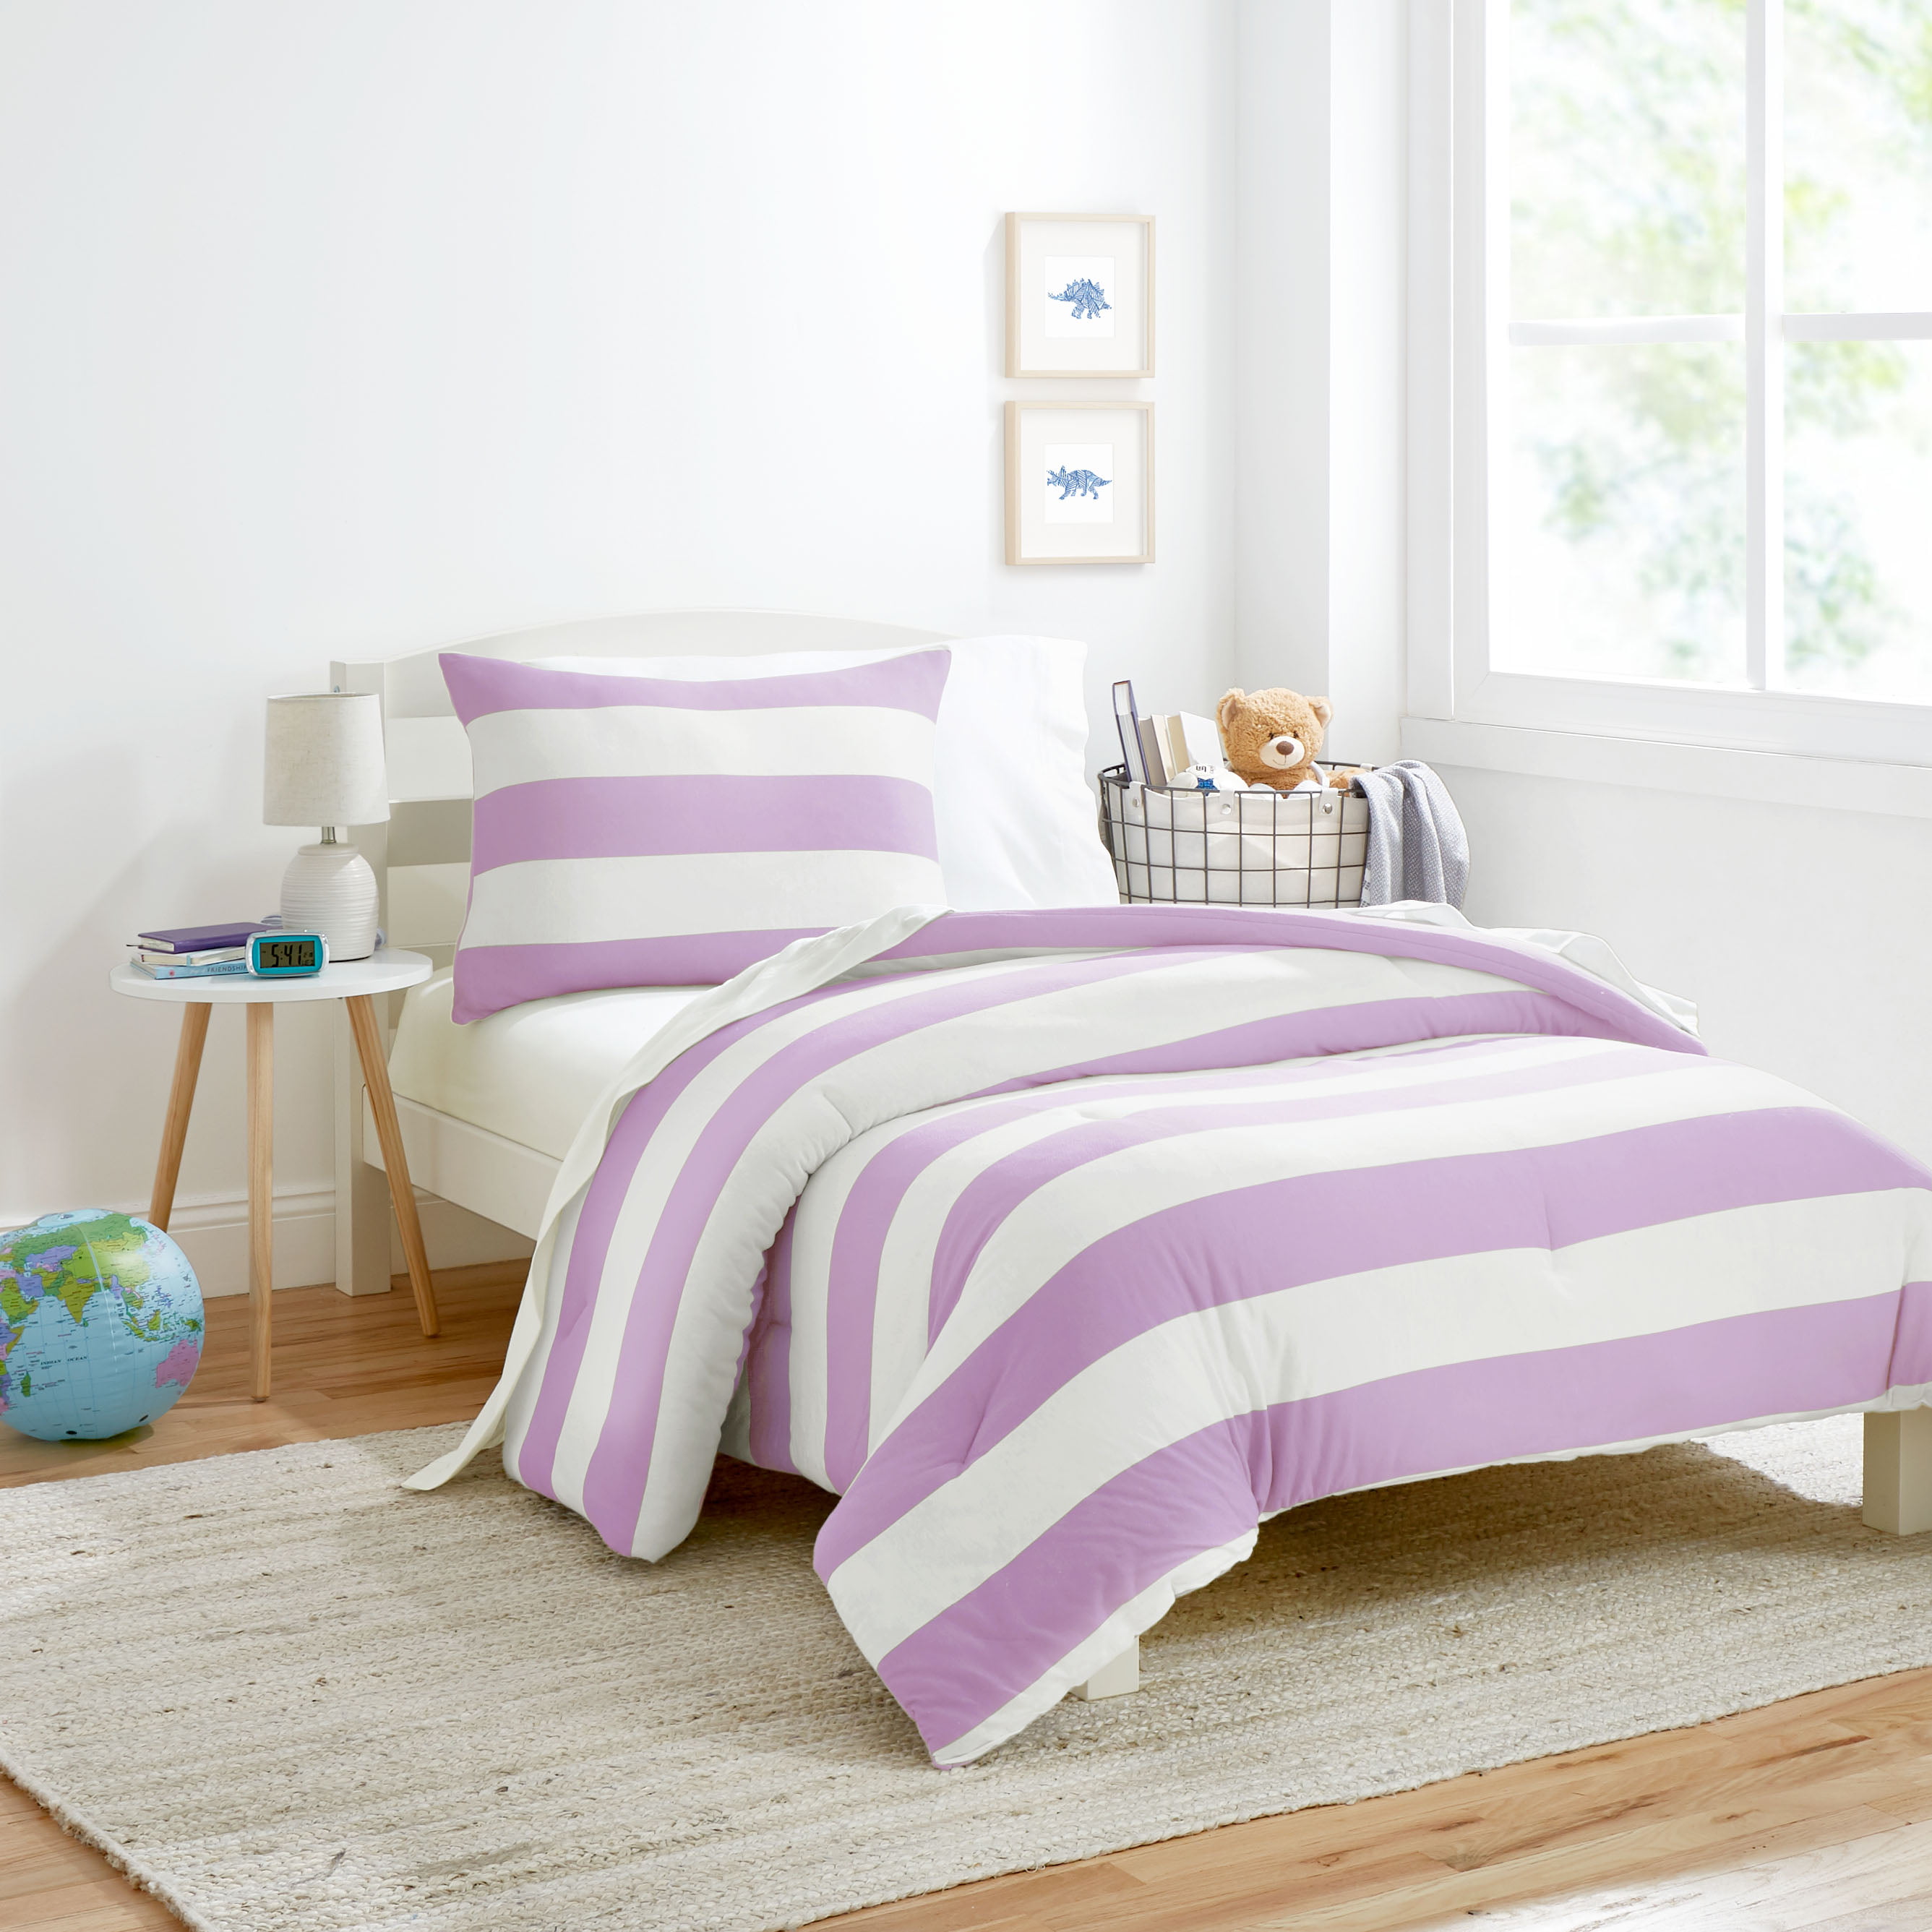 Modern Comfy Tee Pink Stripe Organic Cotton Jersey Kids Pillow